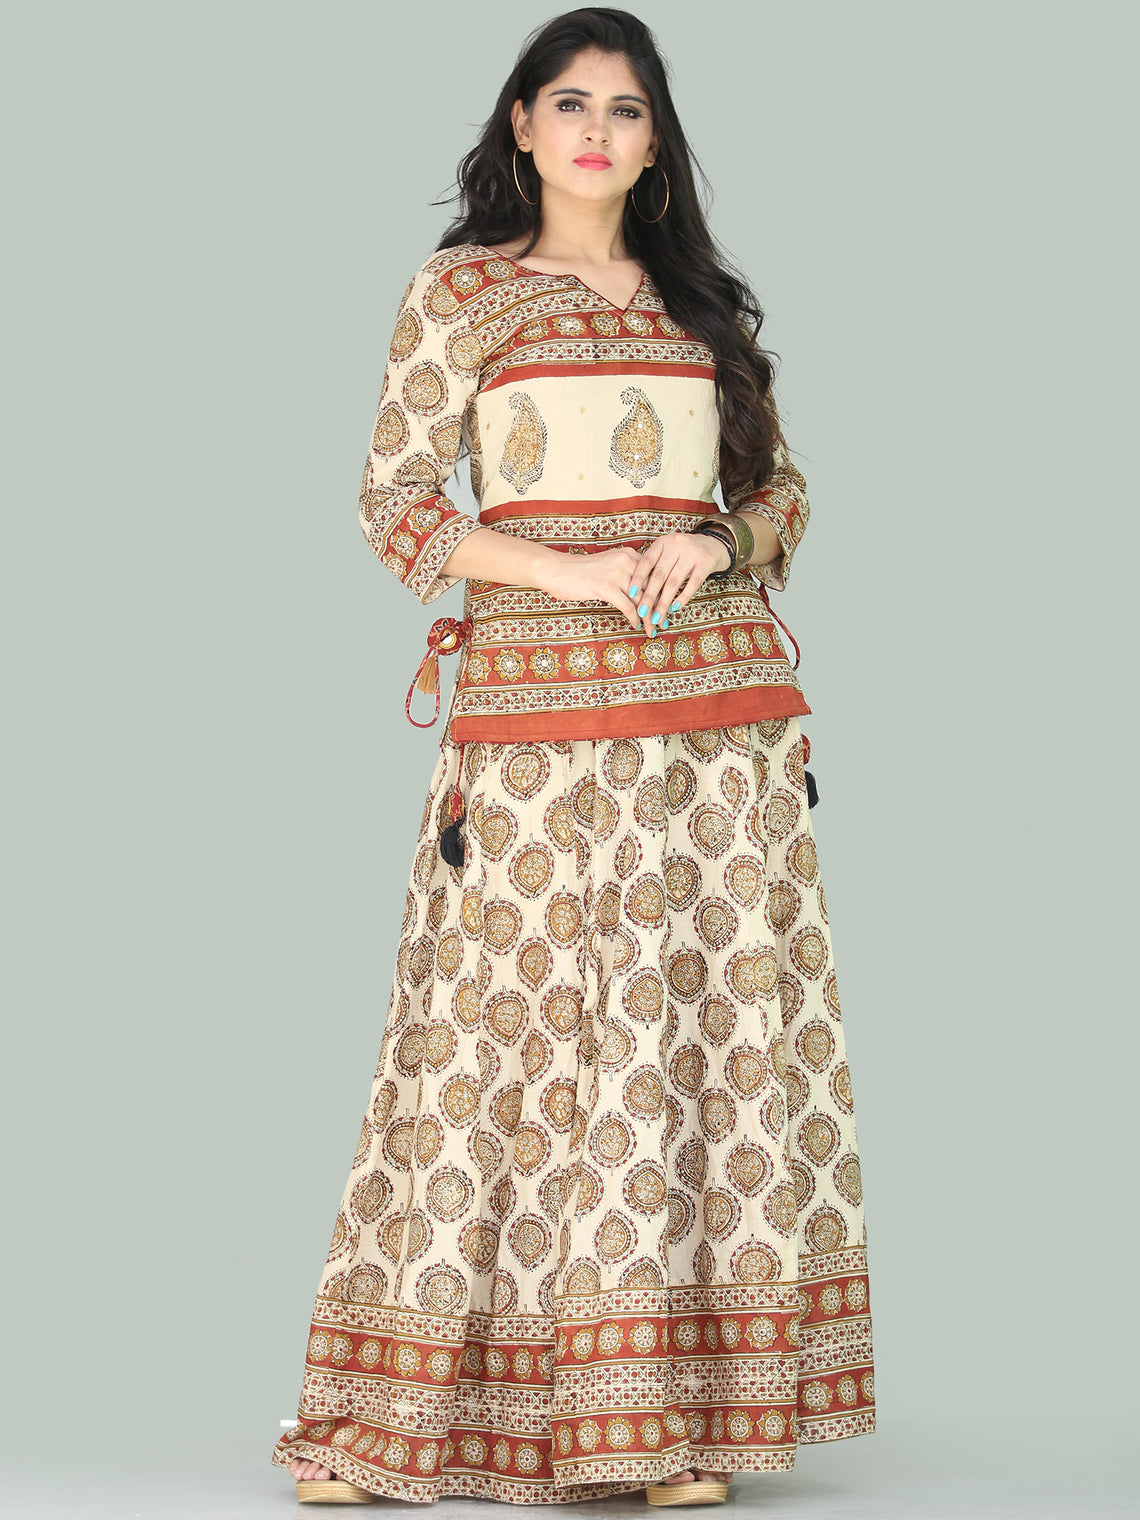 Naaz Bahara - Hand Block Printed Long Embroidered Top & Skirt Dress ...